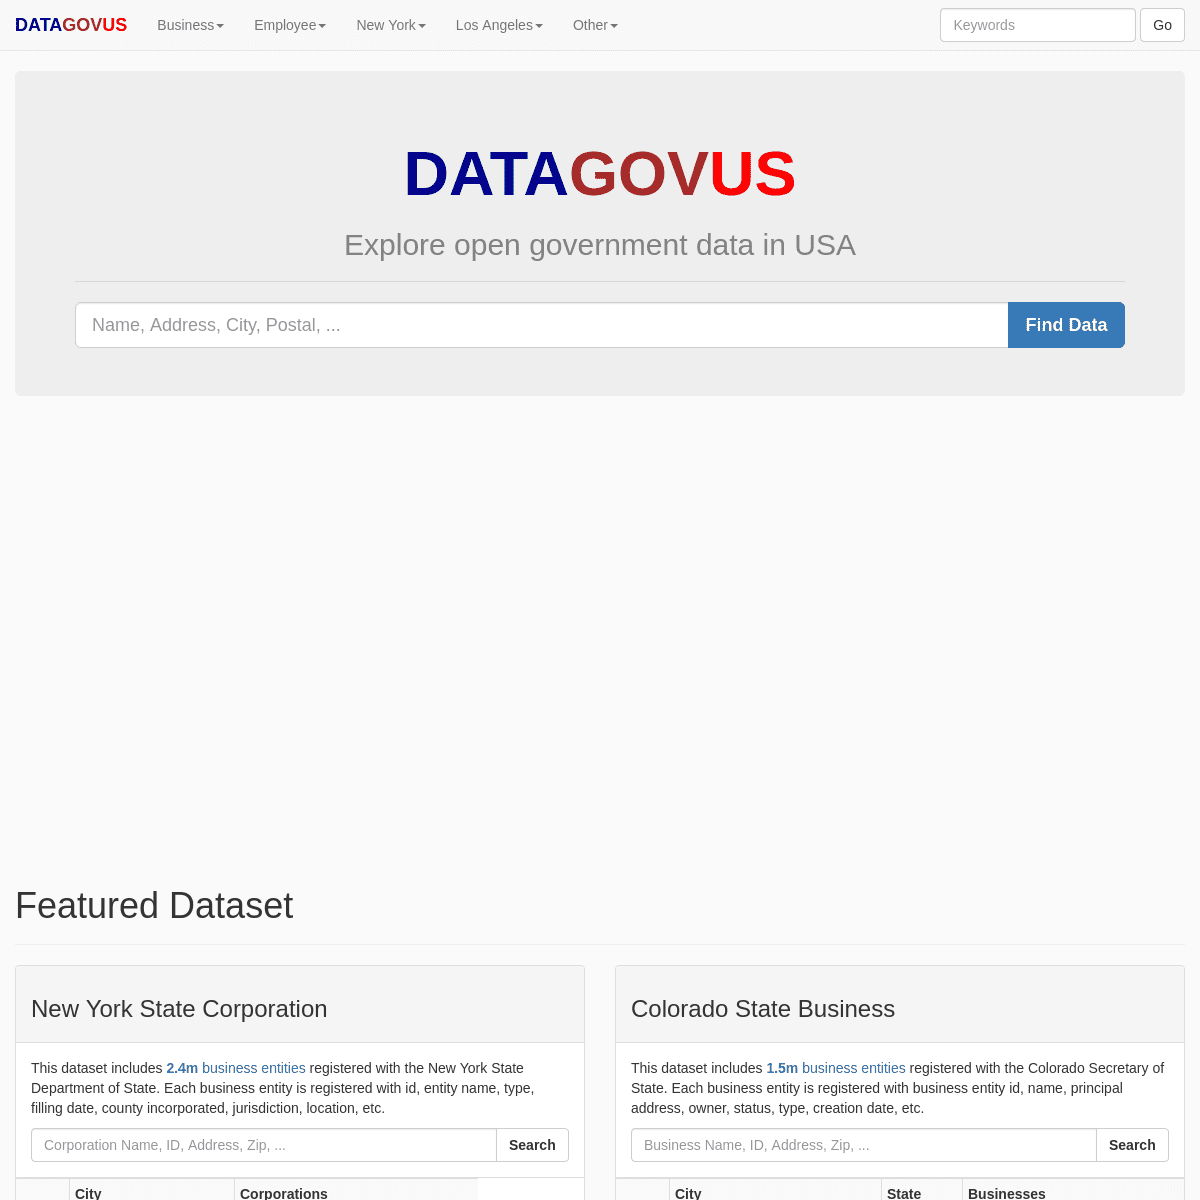 DATAGOVUS: Explore Open Government Data in USA